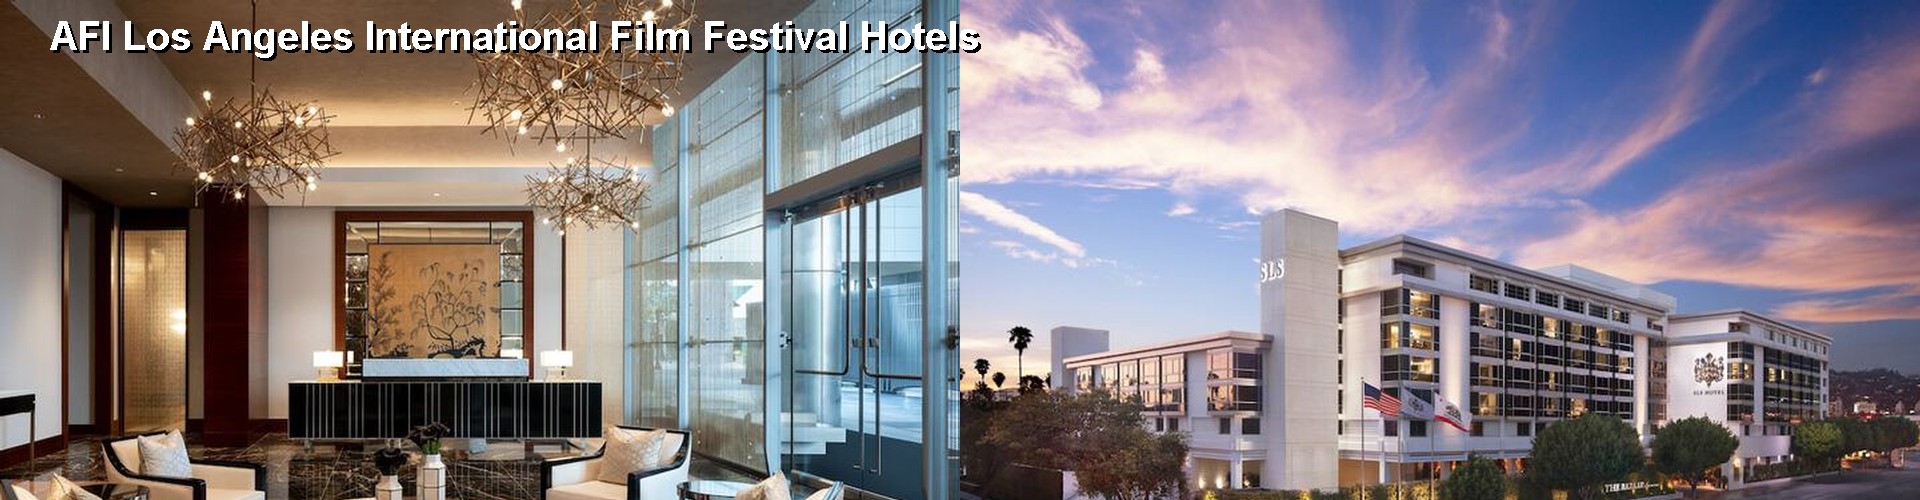 5 Best Hotels near AFI Los Angeles International Film Festival